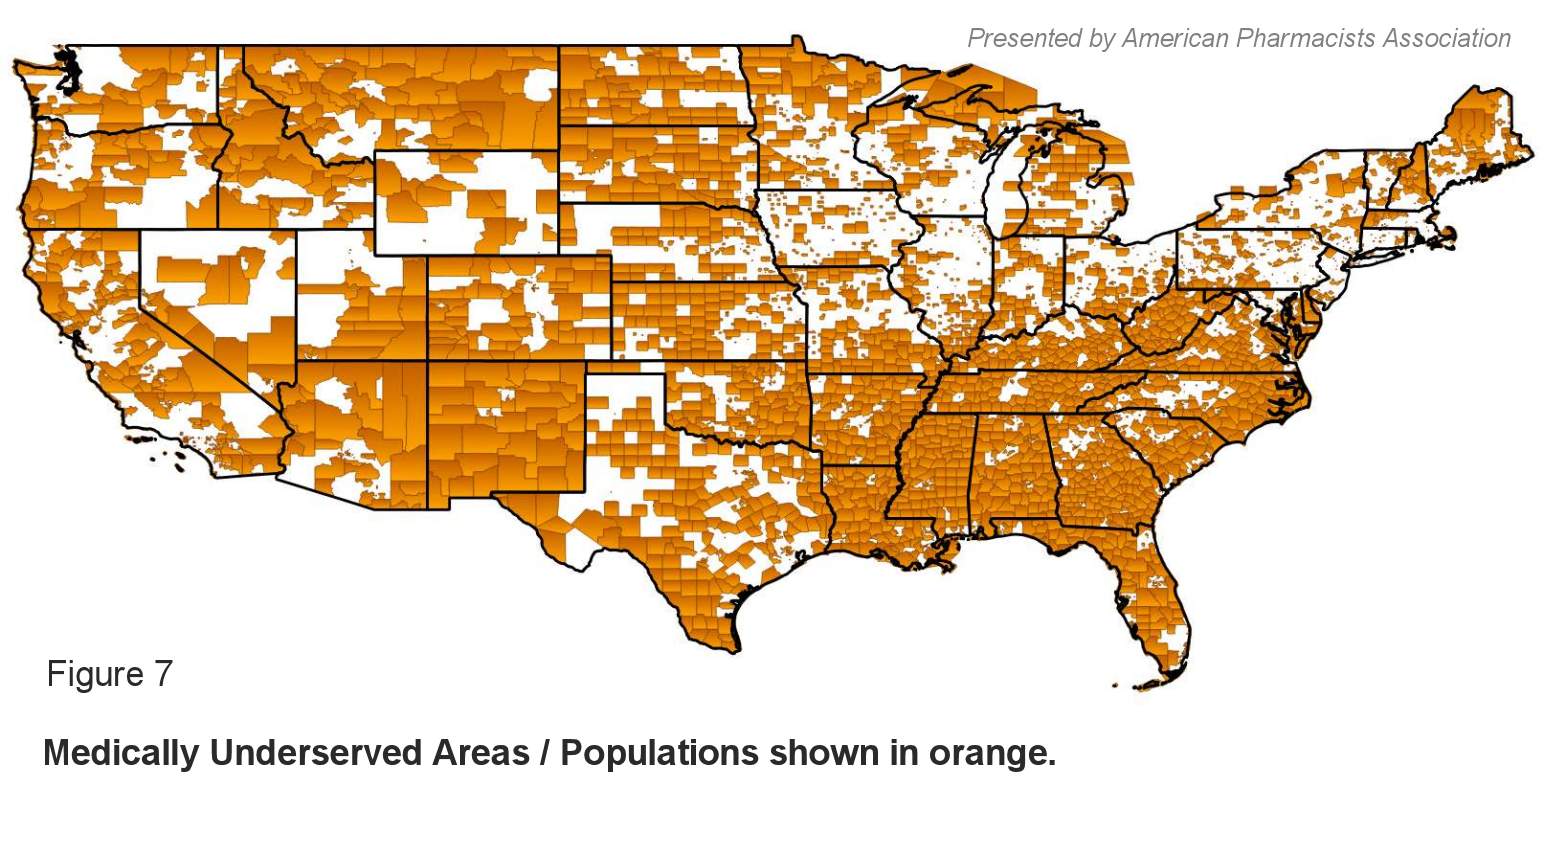 Figure 7: Medically Underserved Areas / Populations shown in orange.